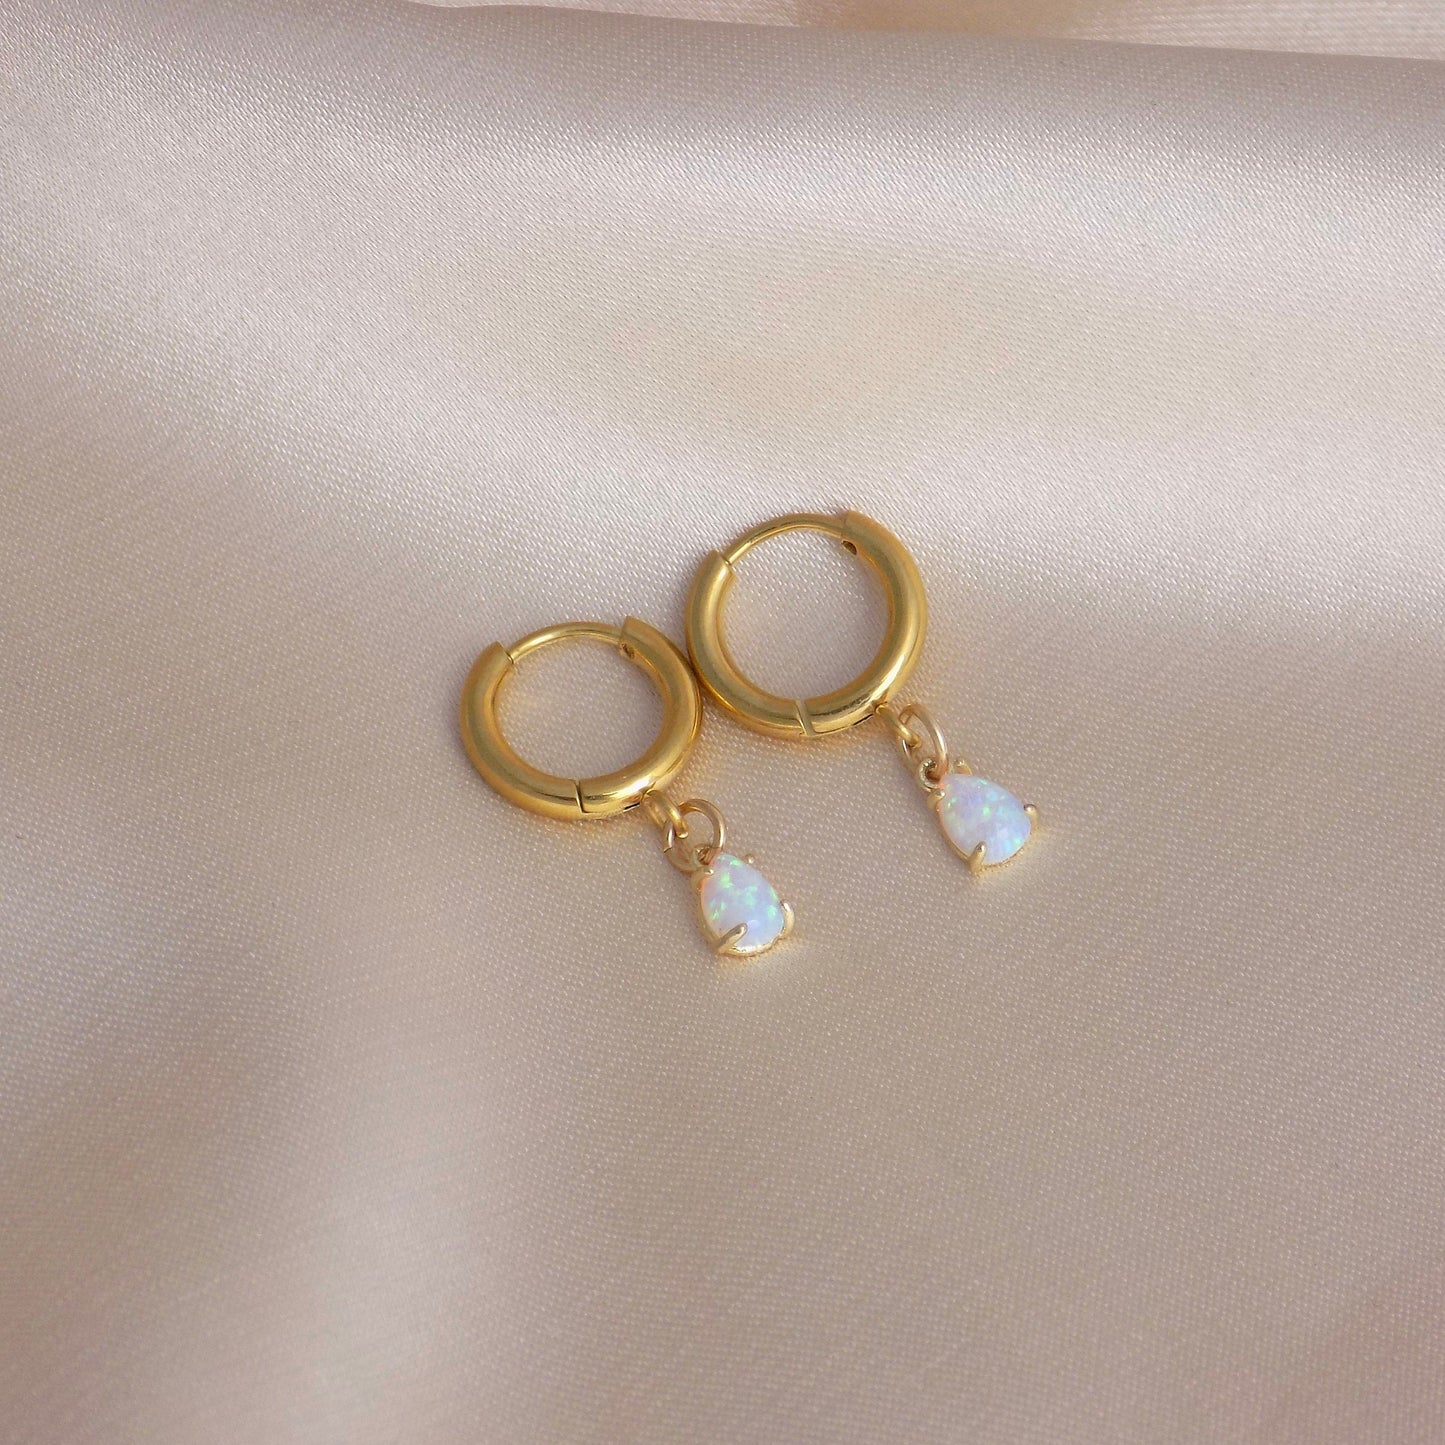 Gold Hoop Earrings With Tiny Teardrop Opal Gemstones, Christmas Gift Women, M6-713